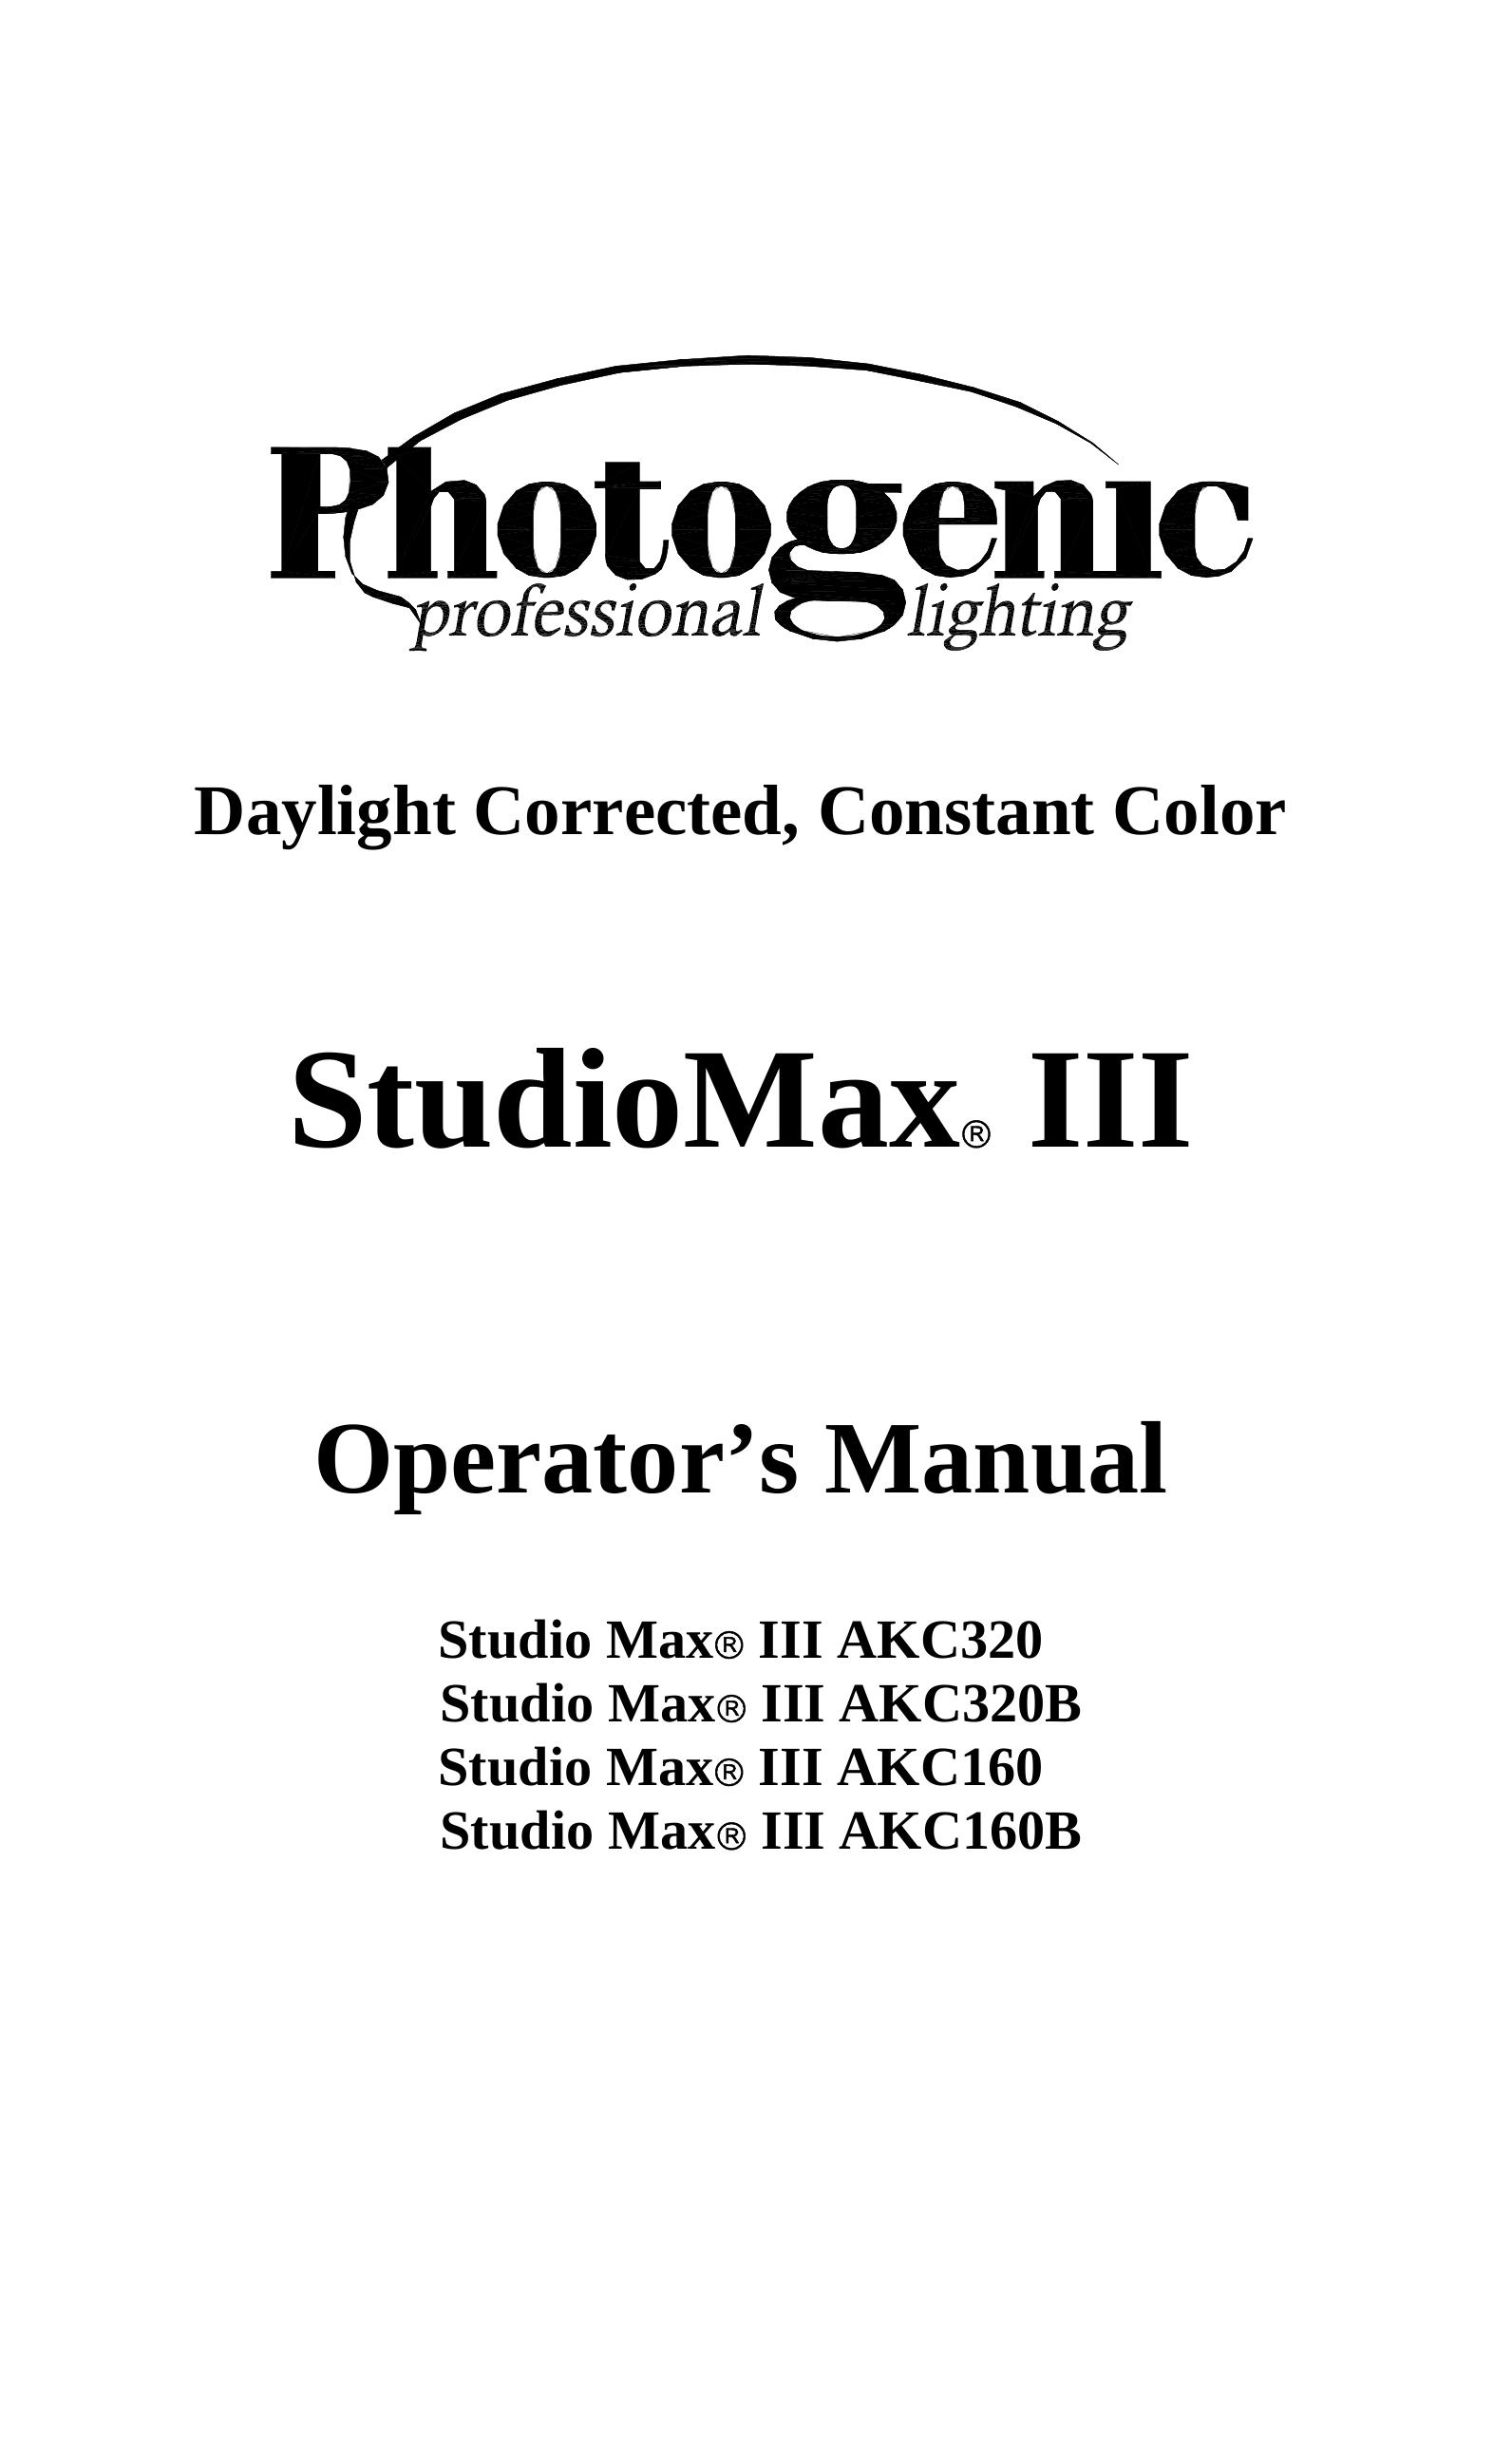 Photogenic Professional Lighting AKC160 Camera Flash User Manual